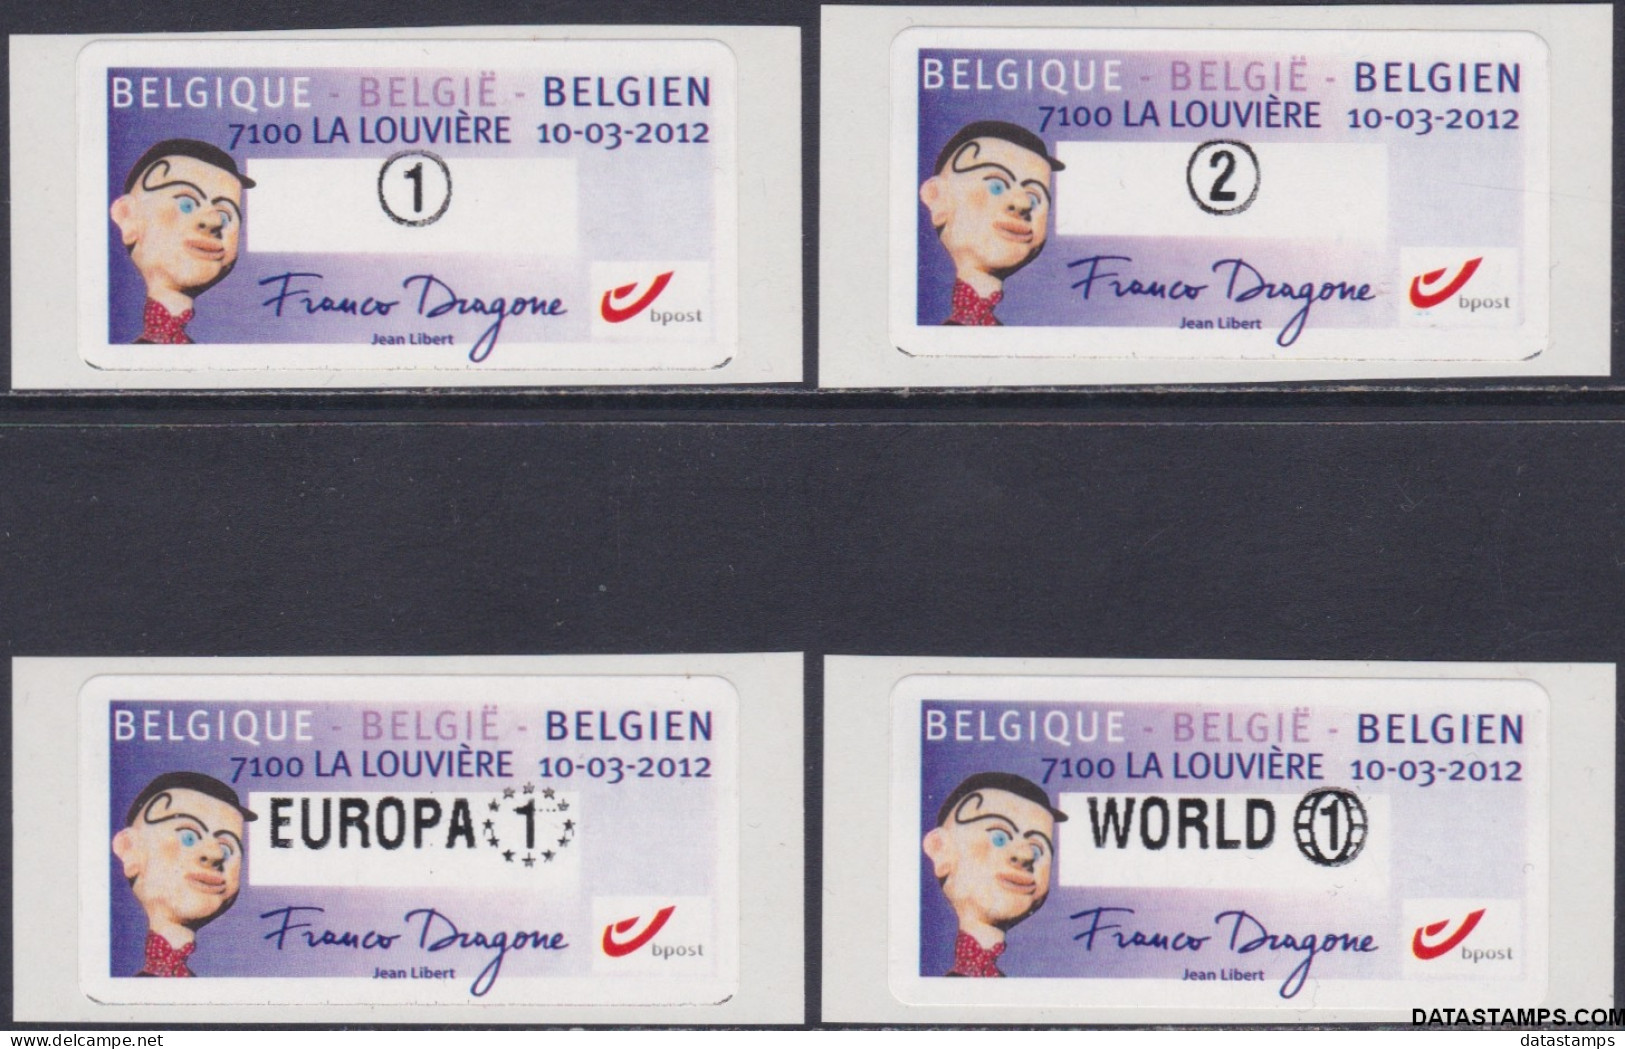 België 2012 - Mi:autom 80, Yv:TD 88, OBP:ATM 137 S13, Machine Stamp - XX - Free Dragone Jean Libert - Postfris